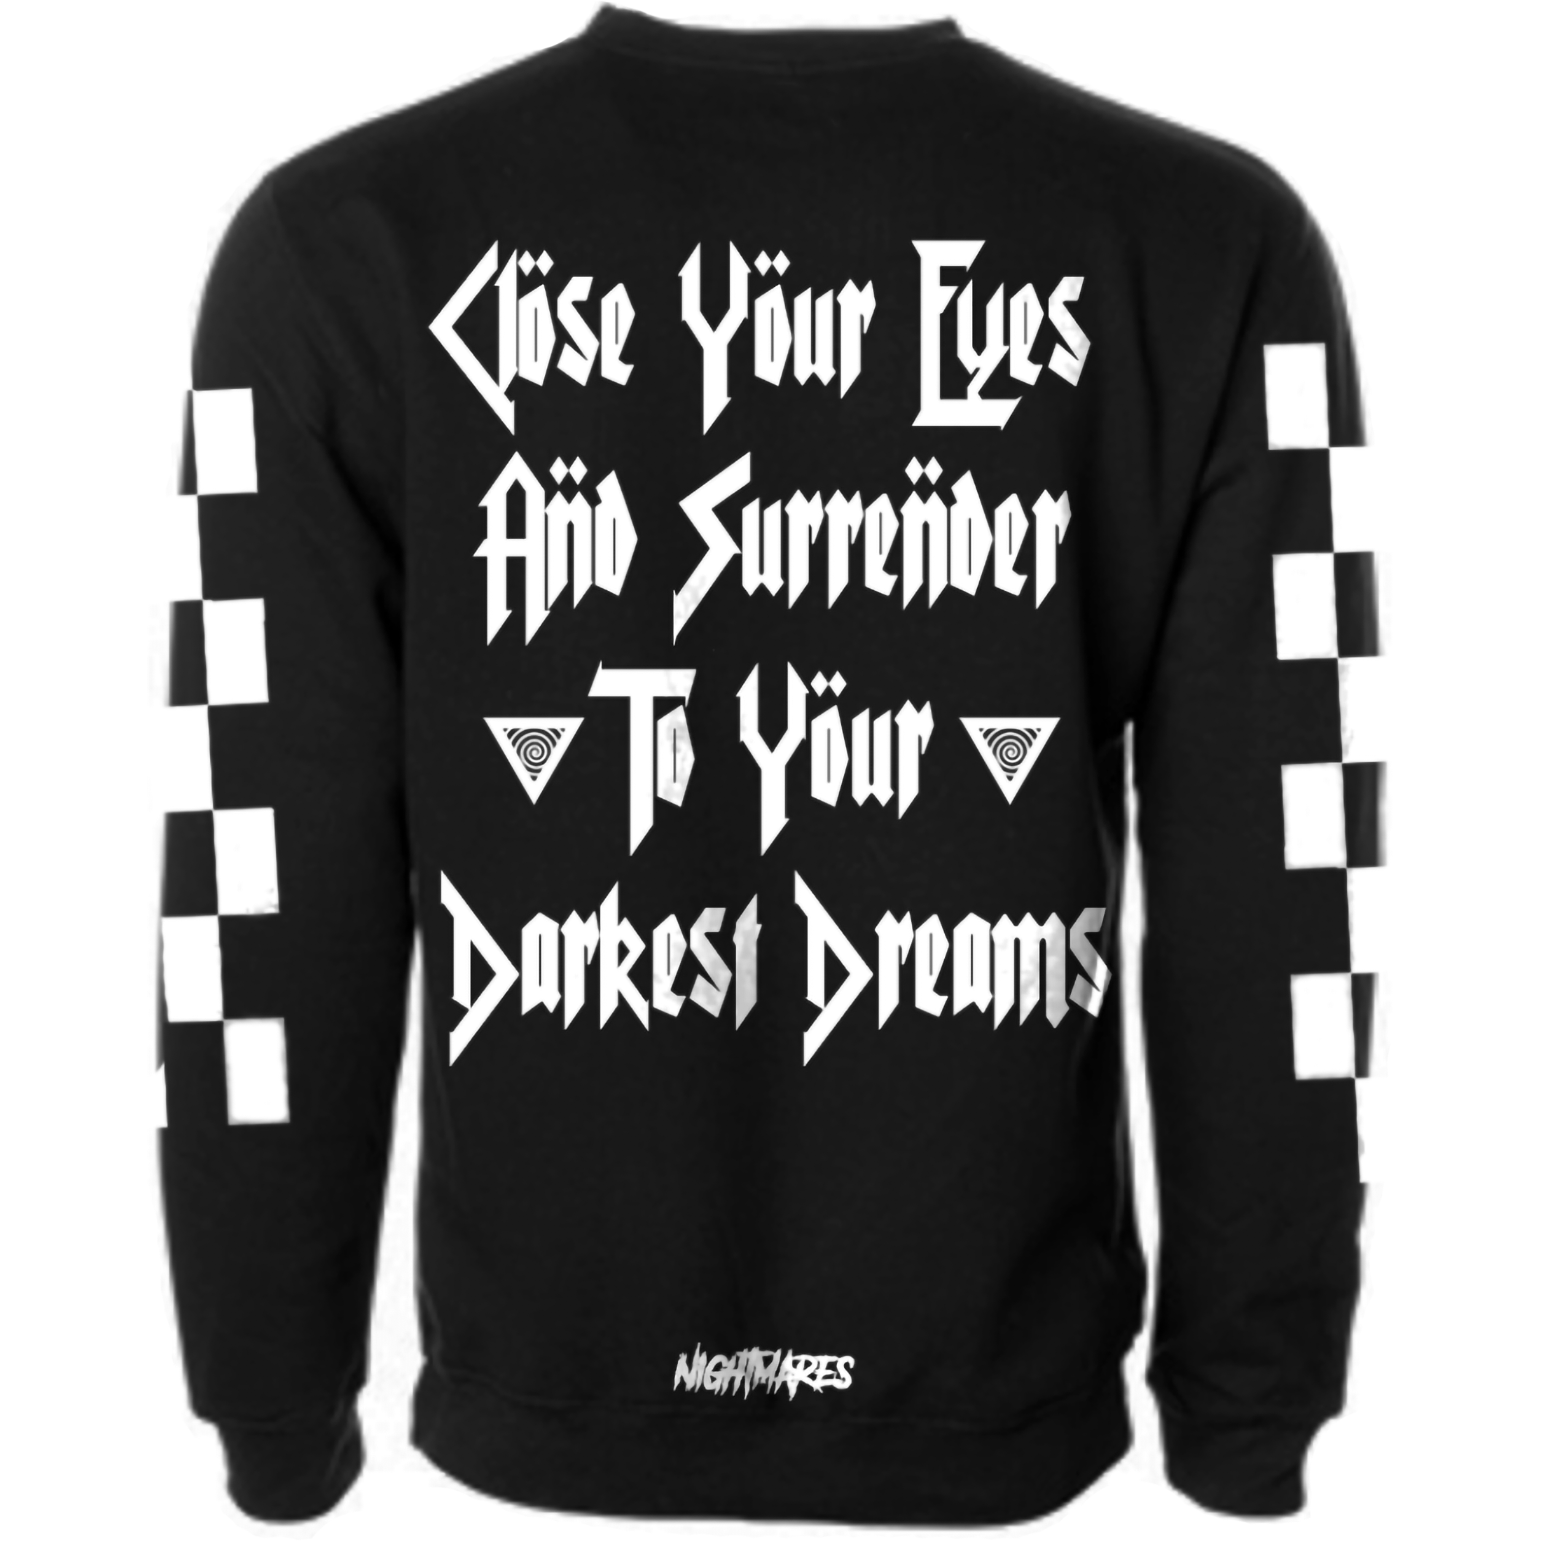 "Nightmares: Darkest Dreams" Sweatshirt